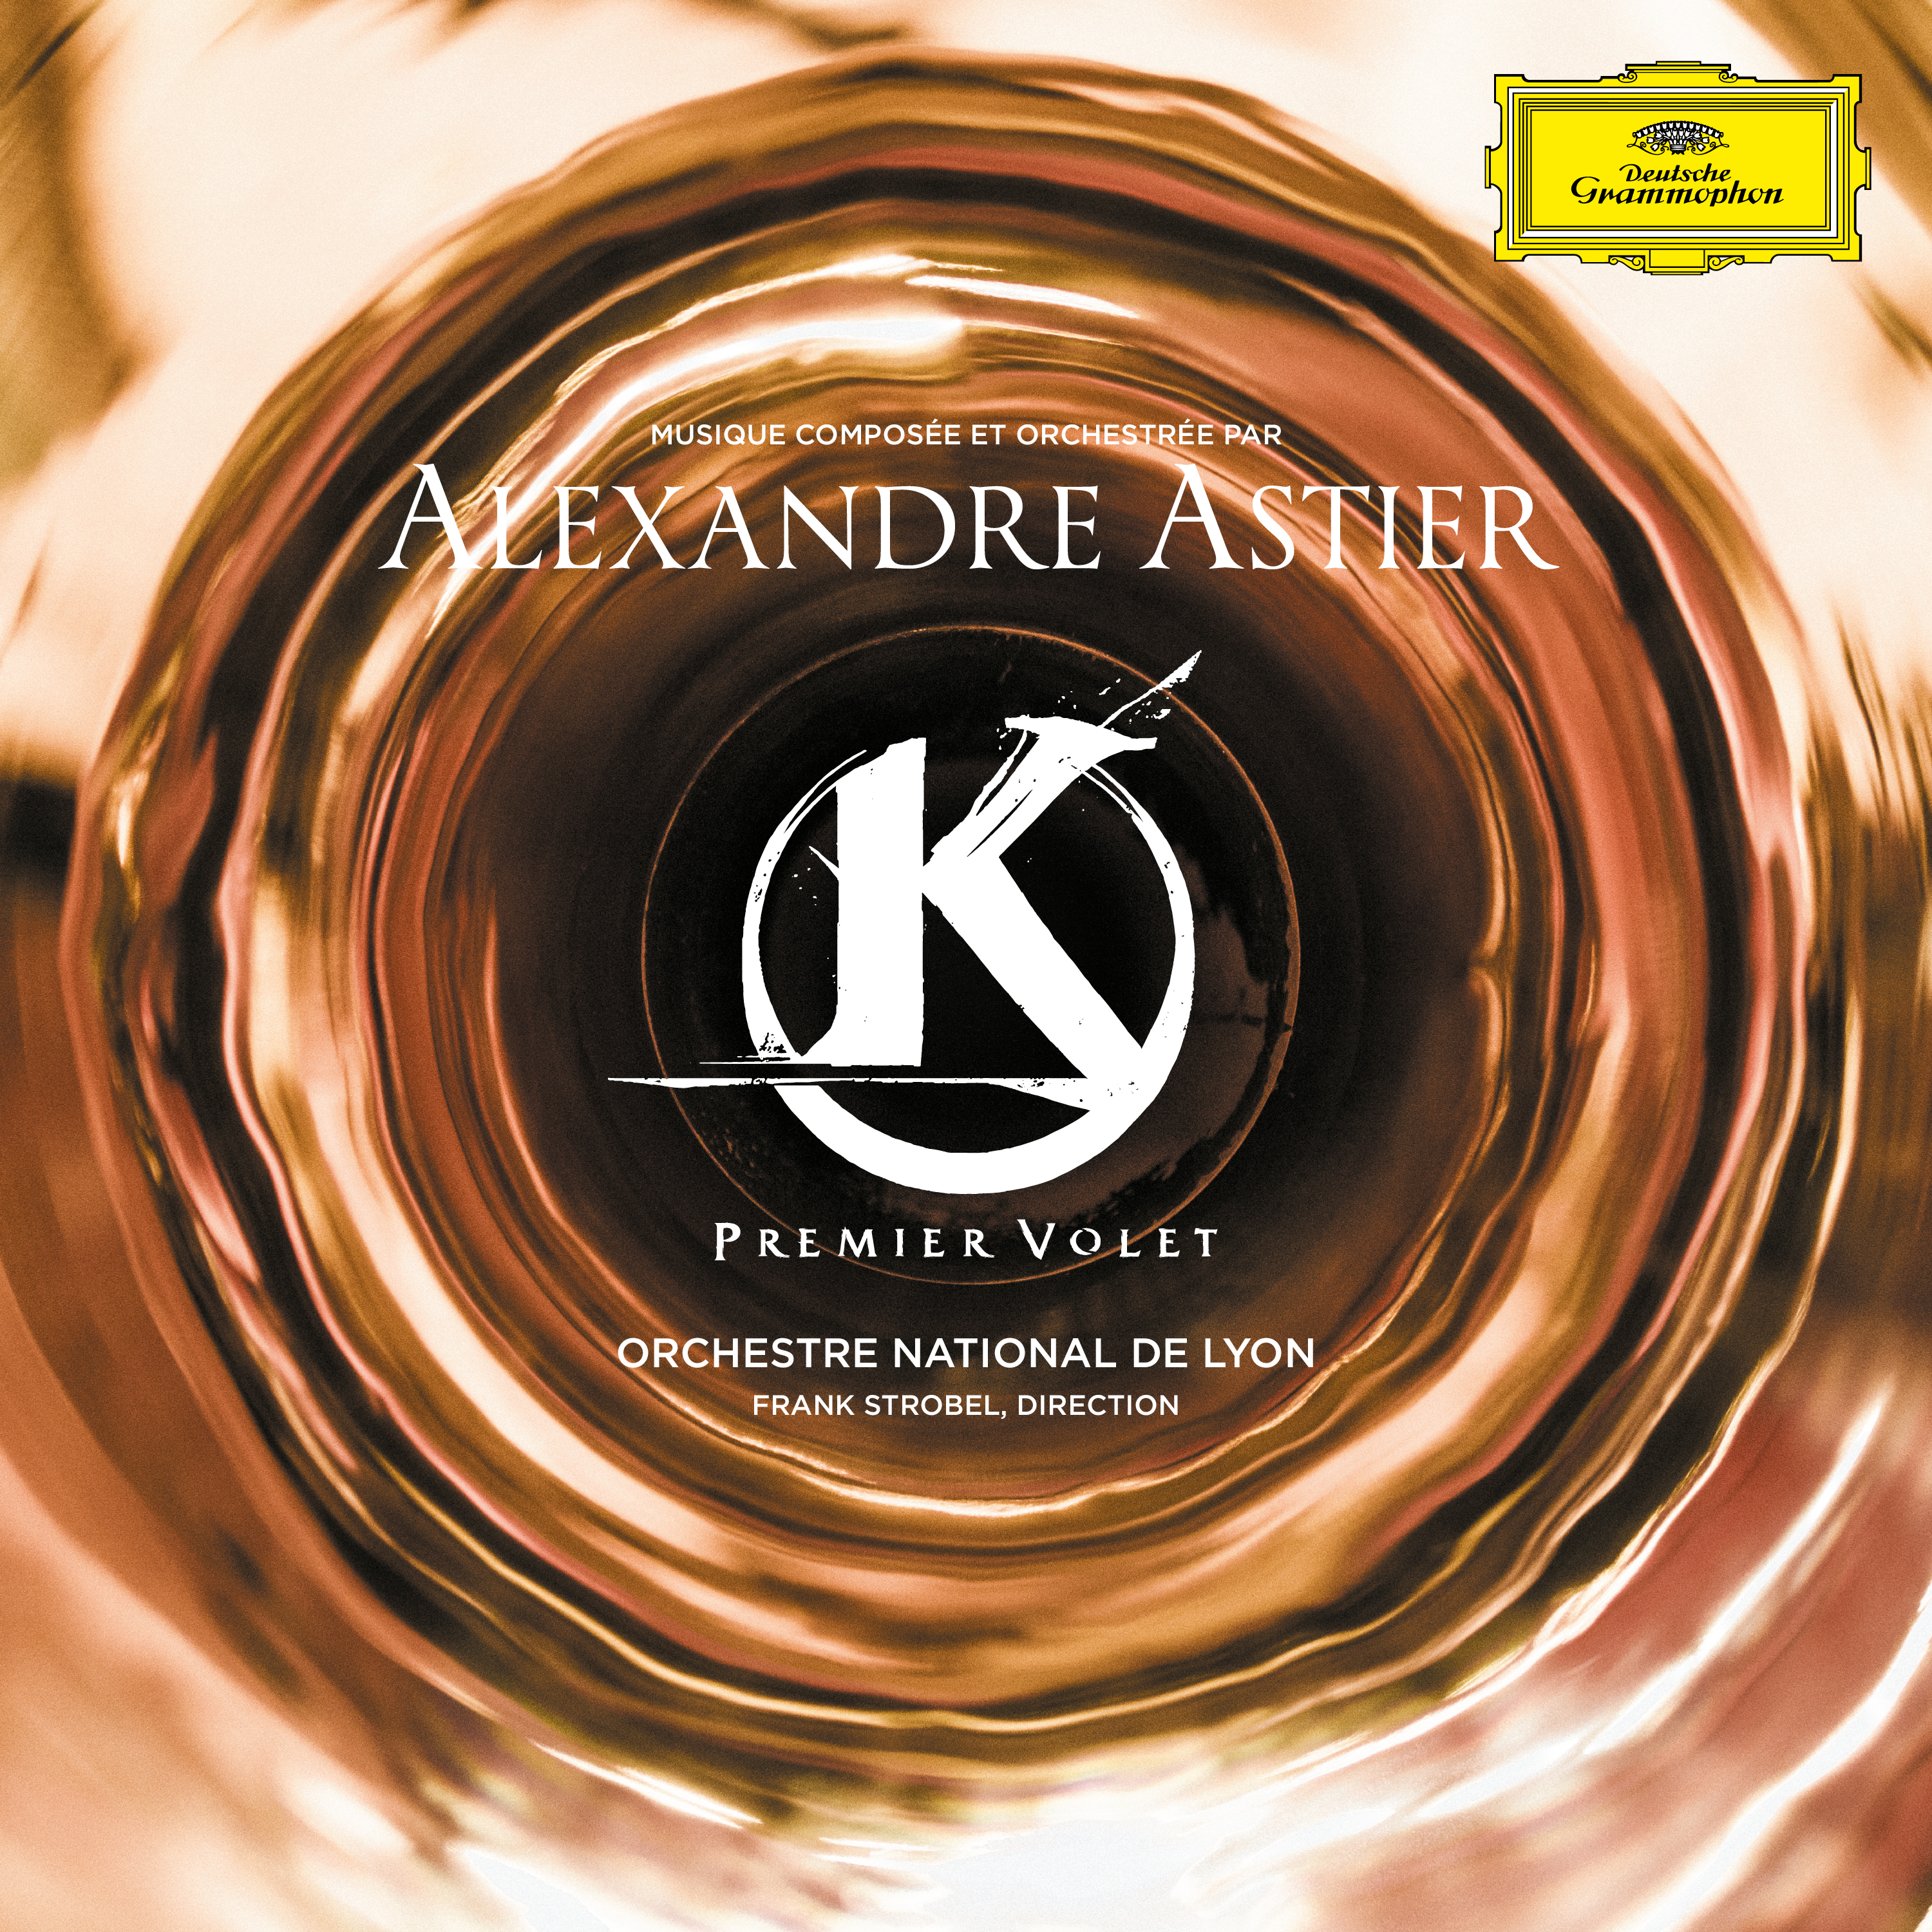 Produktfamilie Kaamelott Premier Volet Soundtrack Alexandre Astier